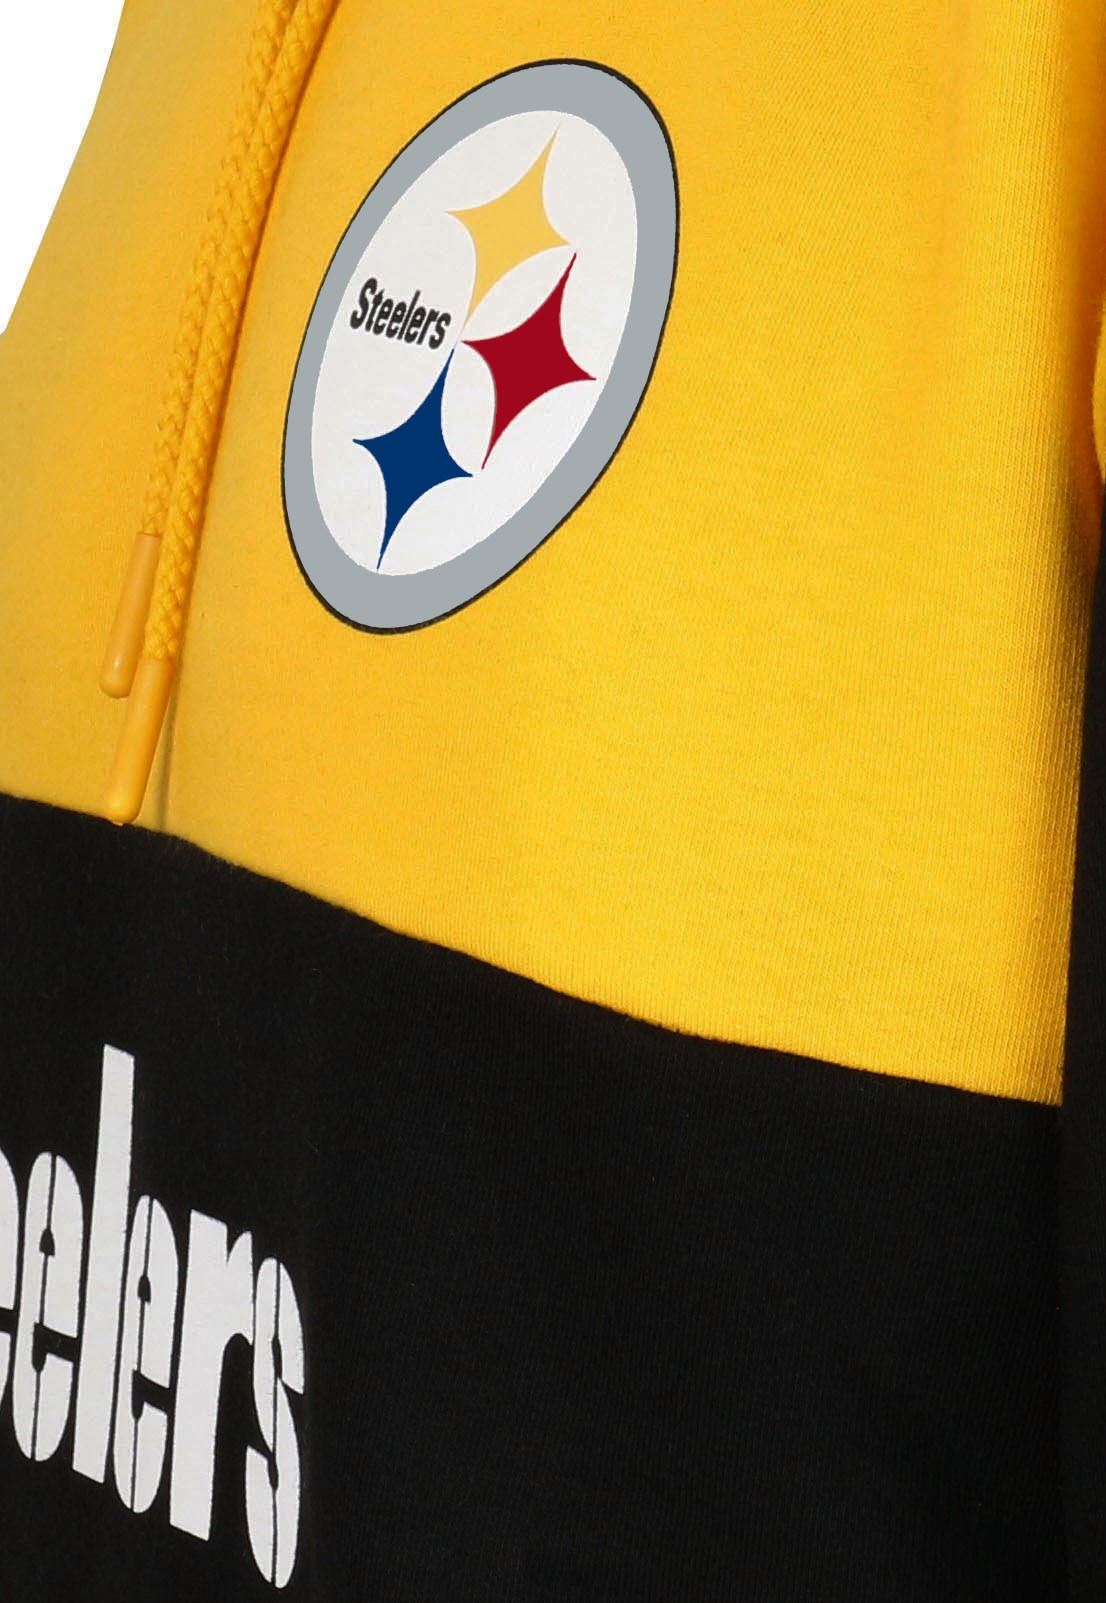 Pittsburgh Steelers NFL Colour Block Hoody Yellow / Black New Era